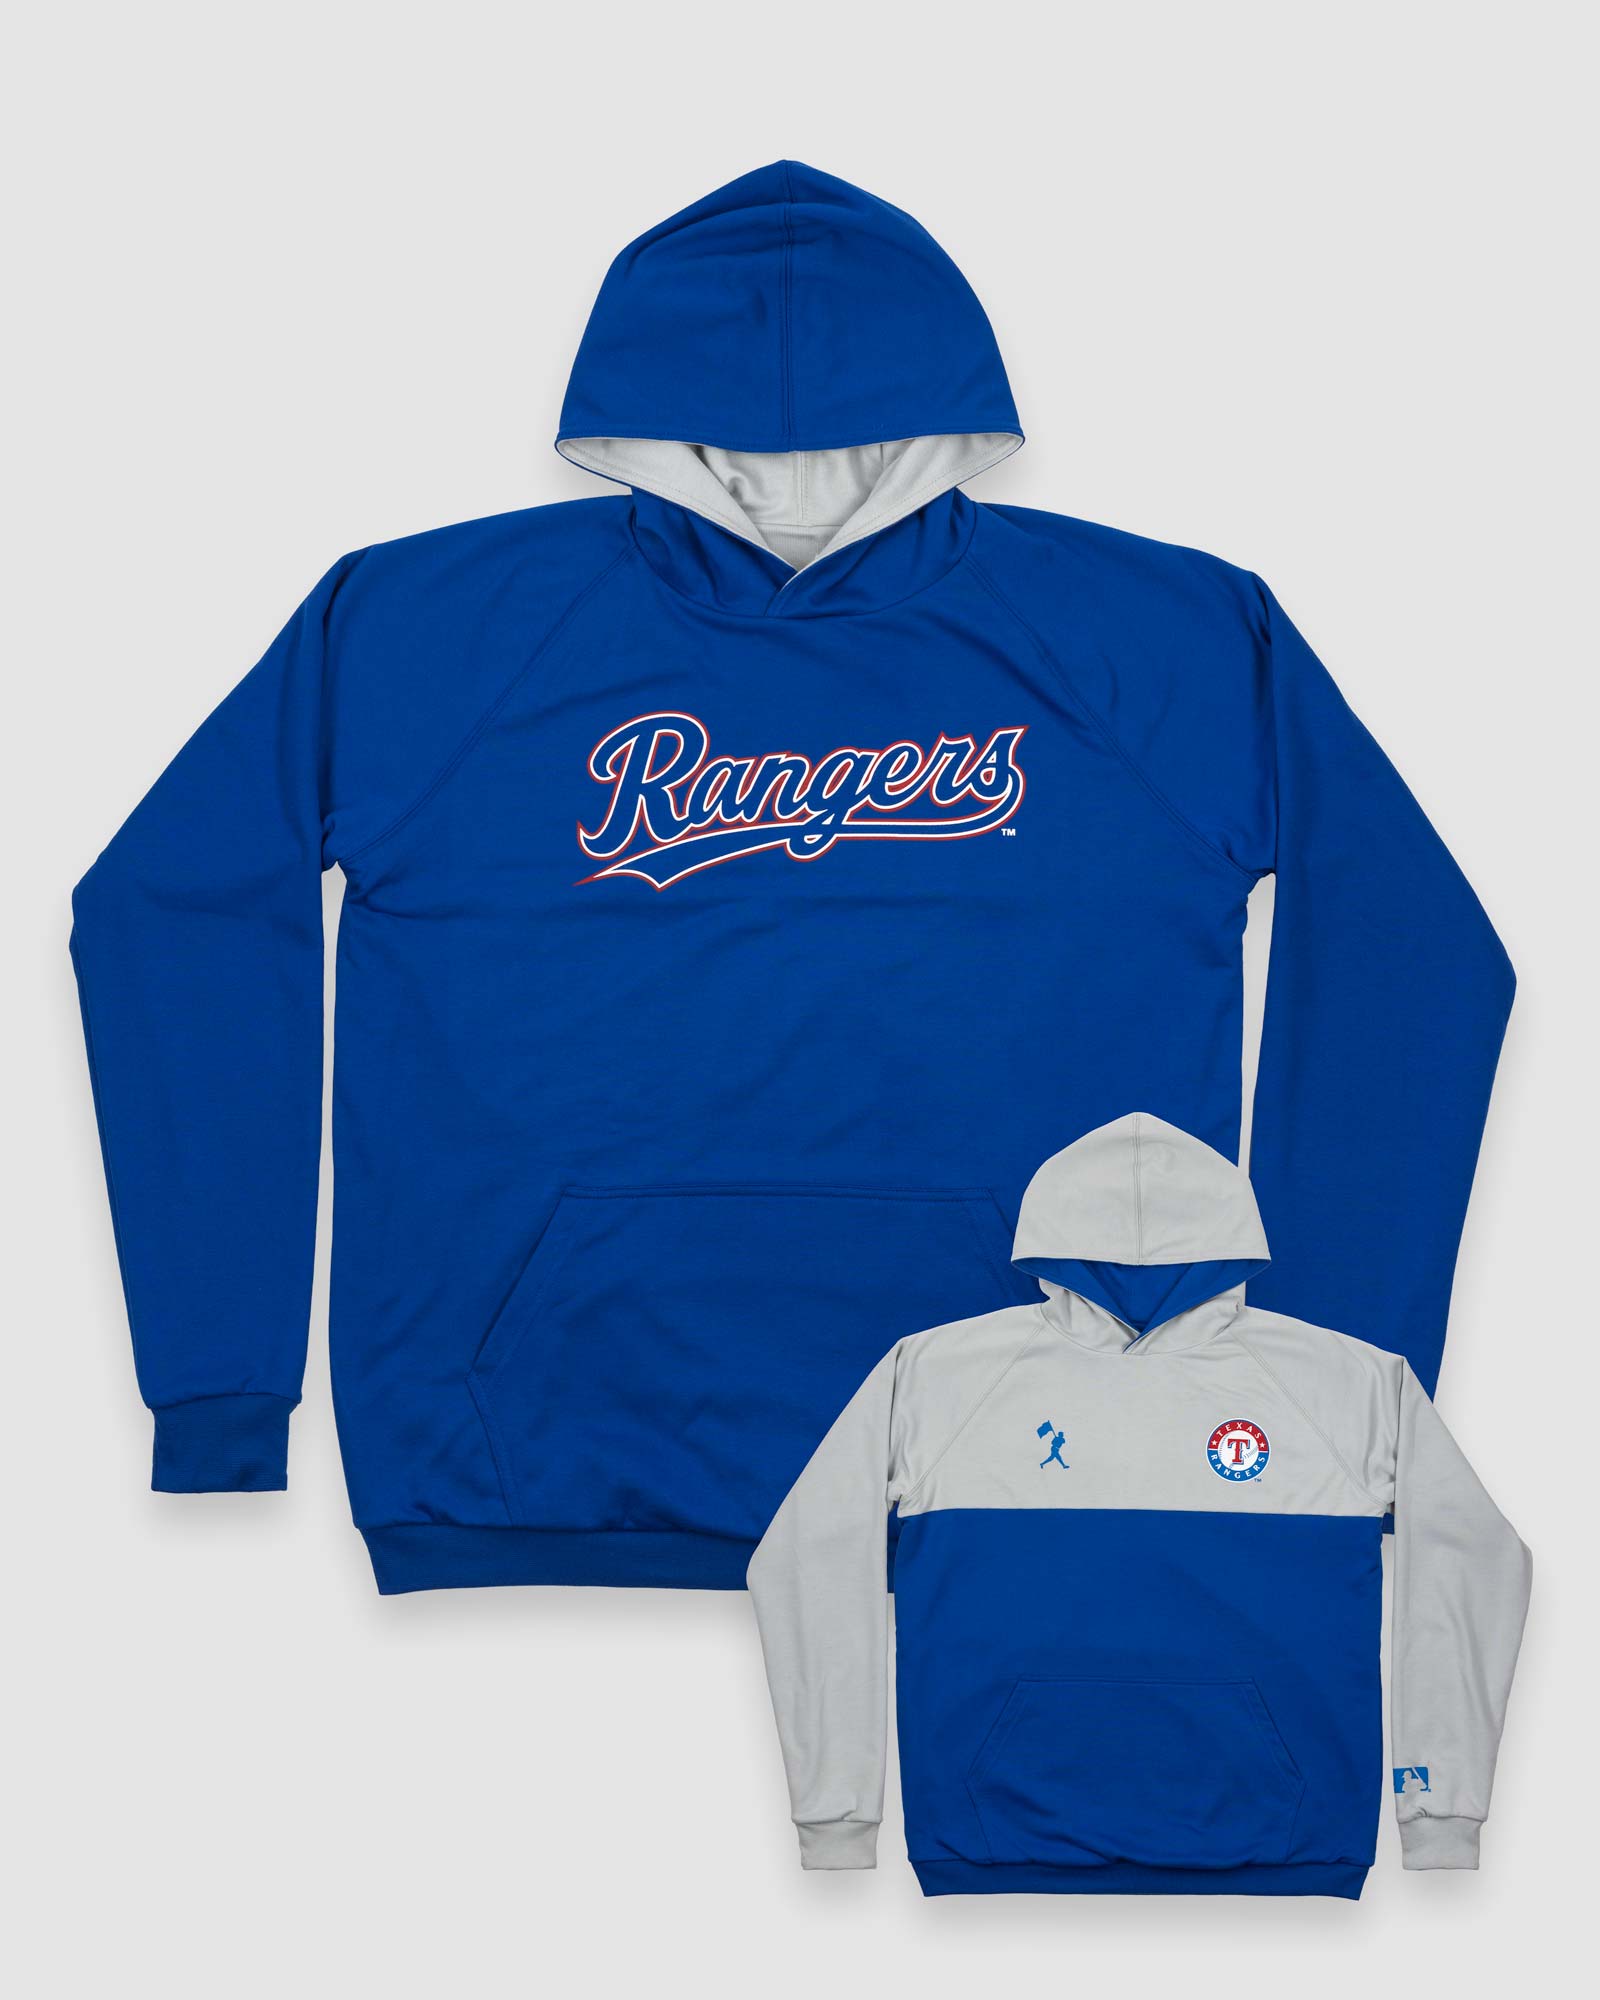 Rangers Baseball Front Pocket and Back Unisex Graphic T-Shirt